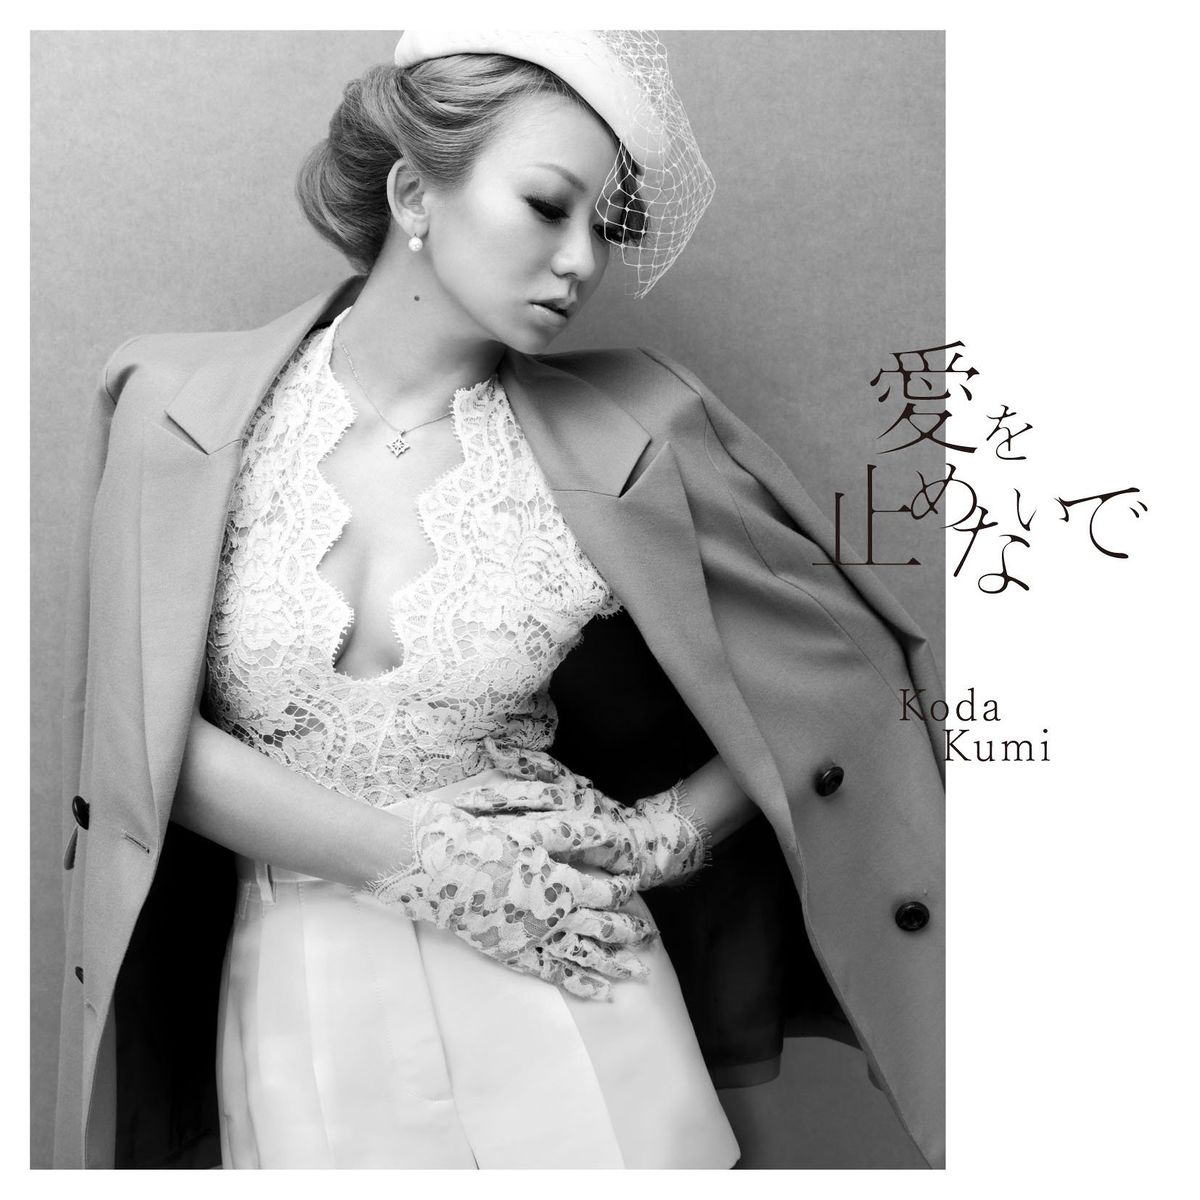 Koda Kumi — Ai wo Tomenaide cover artwork